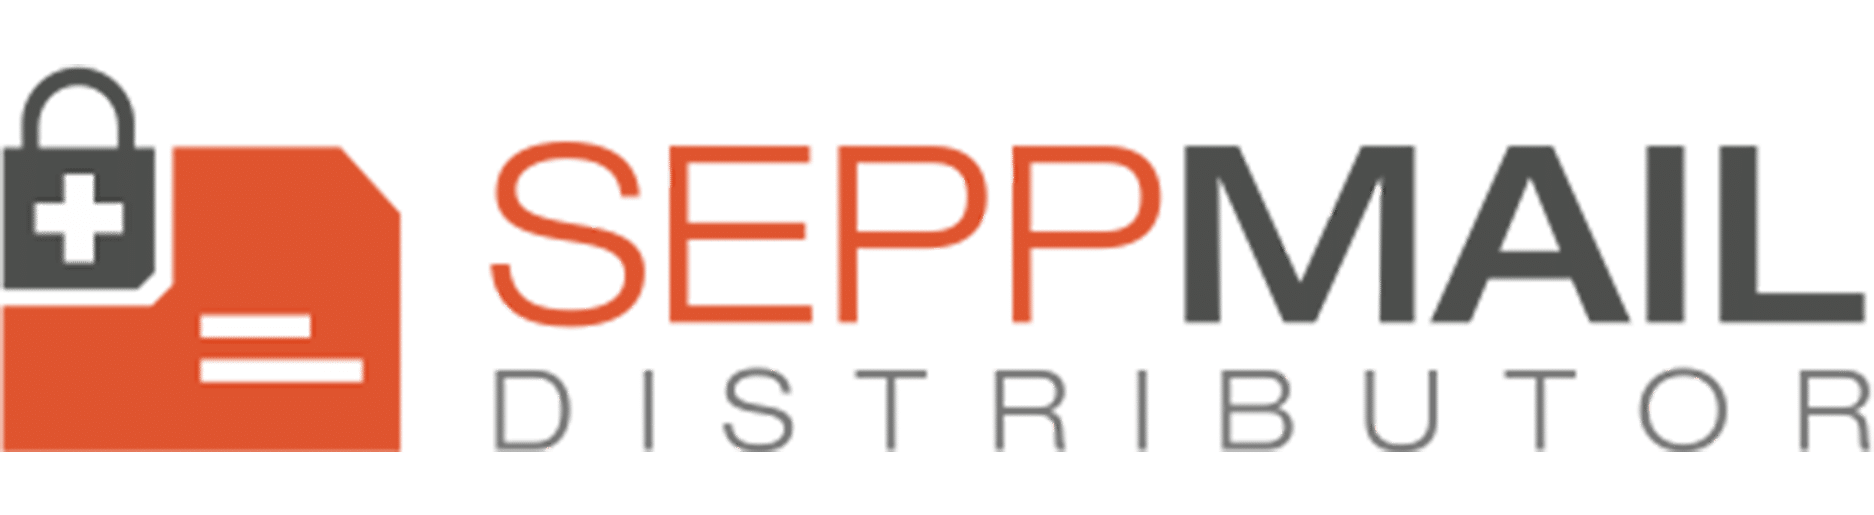 SEPPmail Distributor Logo